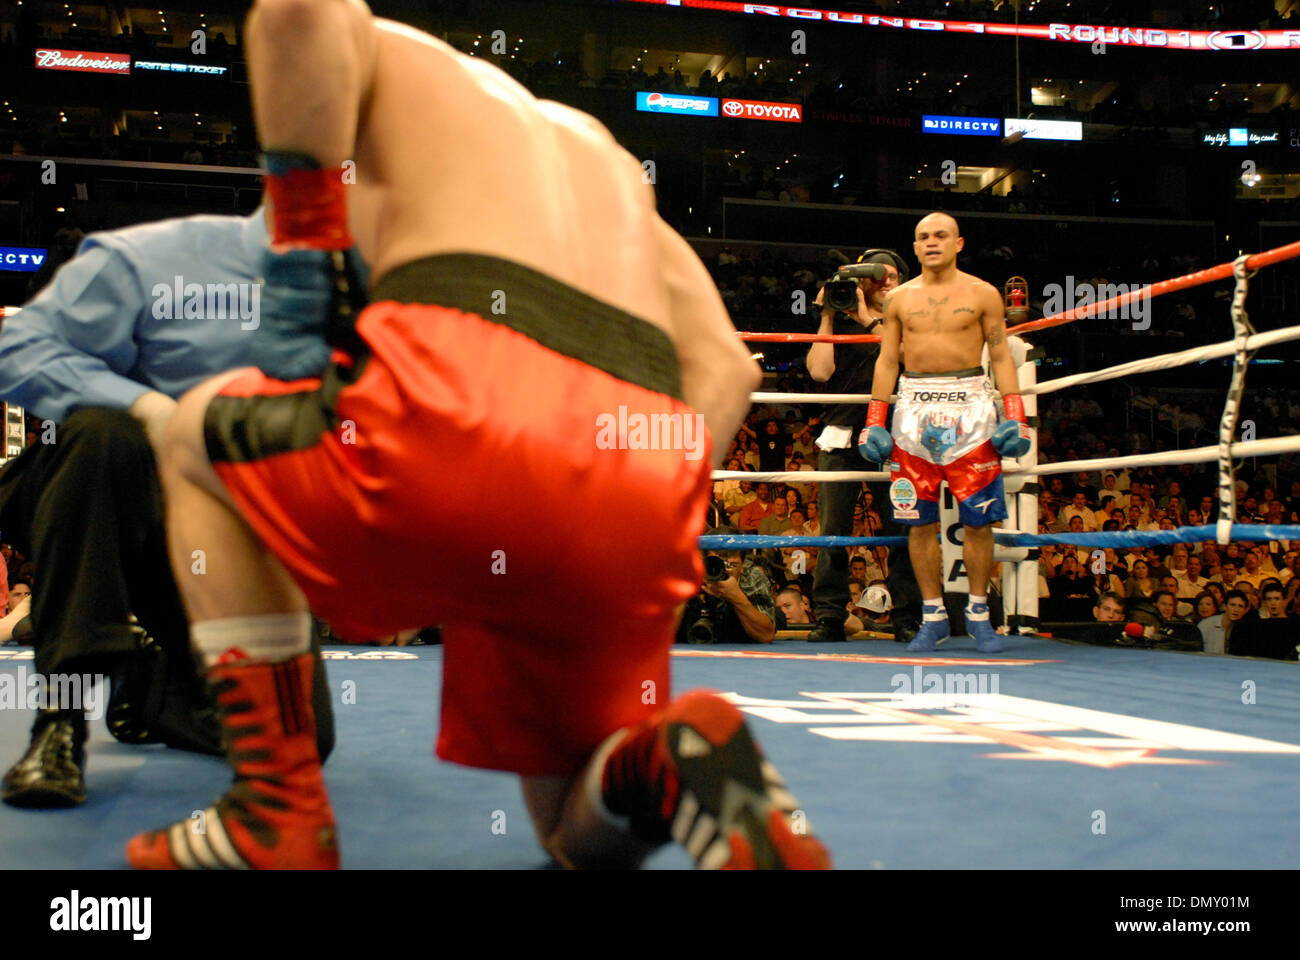 May 20, 2006; Los Angeles, CA, USA; JORGE 'LA HIENA' BARRIOS defeats Janos Nagy in 49 seconds by TKO. Mandatory Credit: Photo by Rob DeLorenzo/ZUMA Press. (©) Copyright 2006 by Rob DeLorenzo Stock Photo